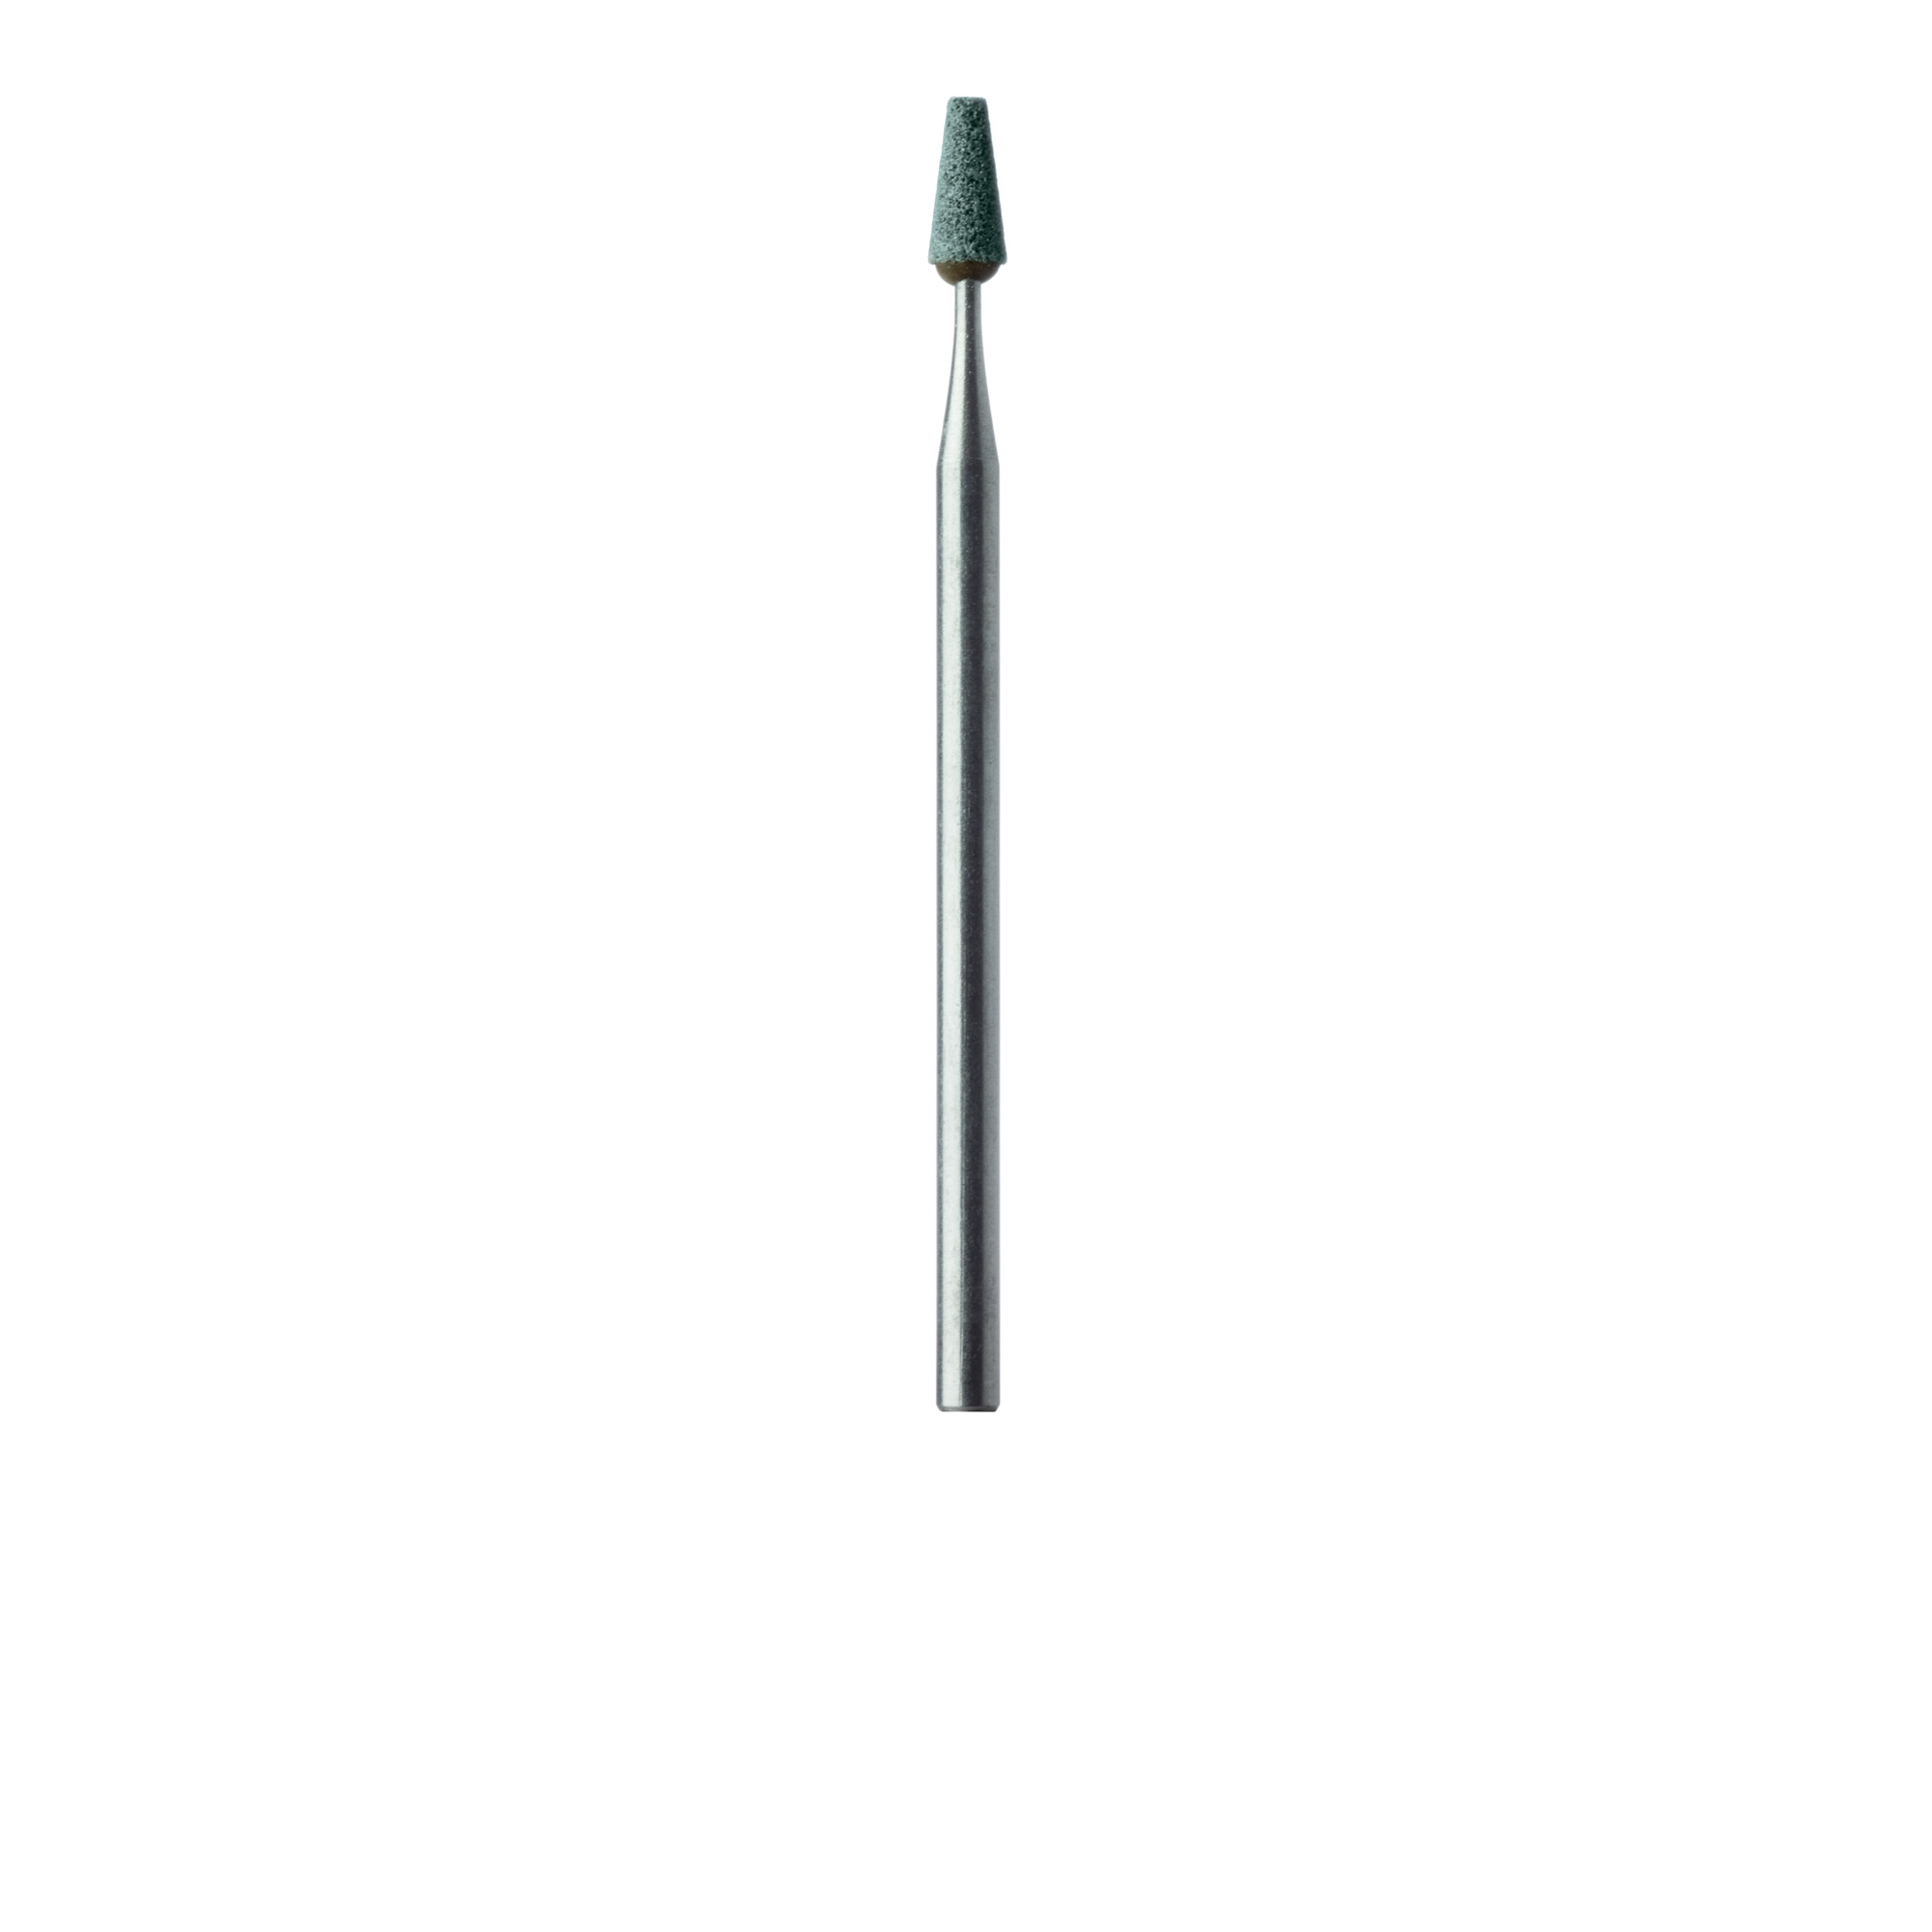 650-028-HP-GRN Abrasive, Green, Tapered Flat End, 2.8mm Ø, Medium, HP